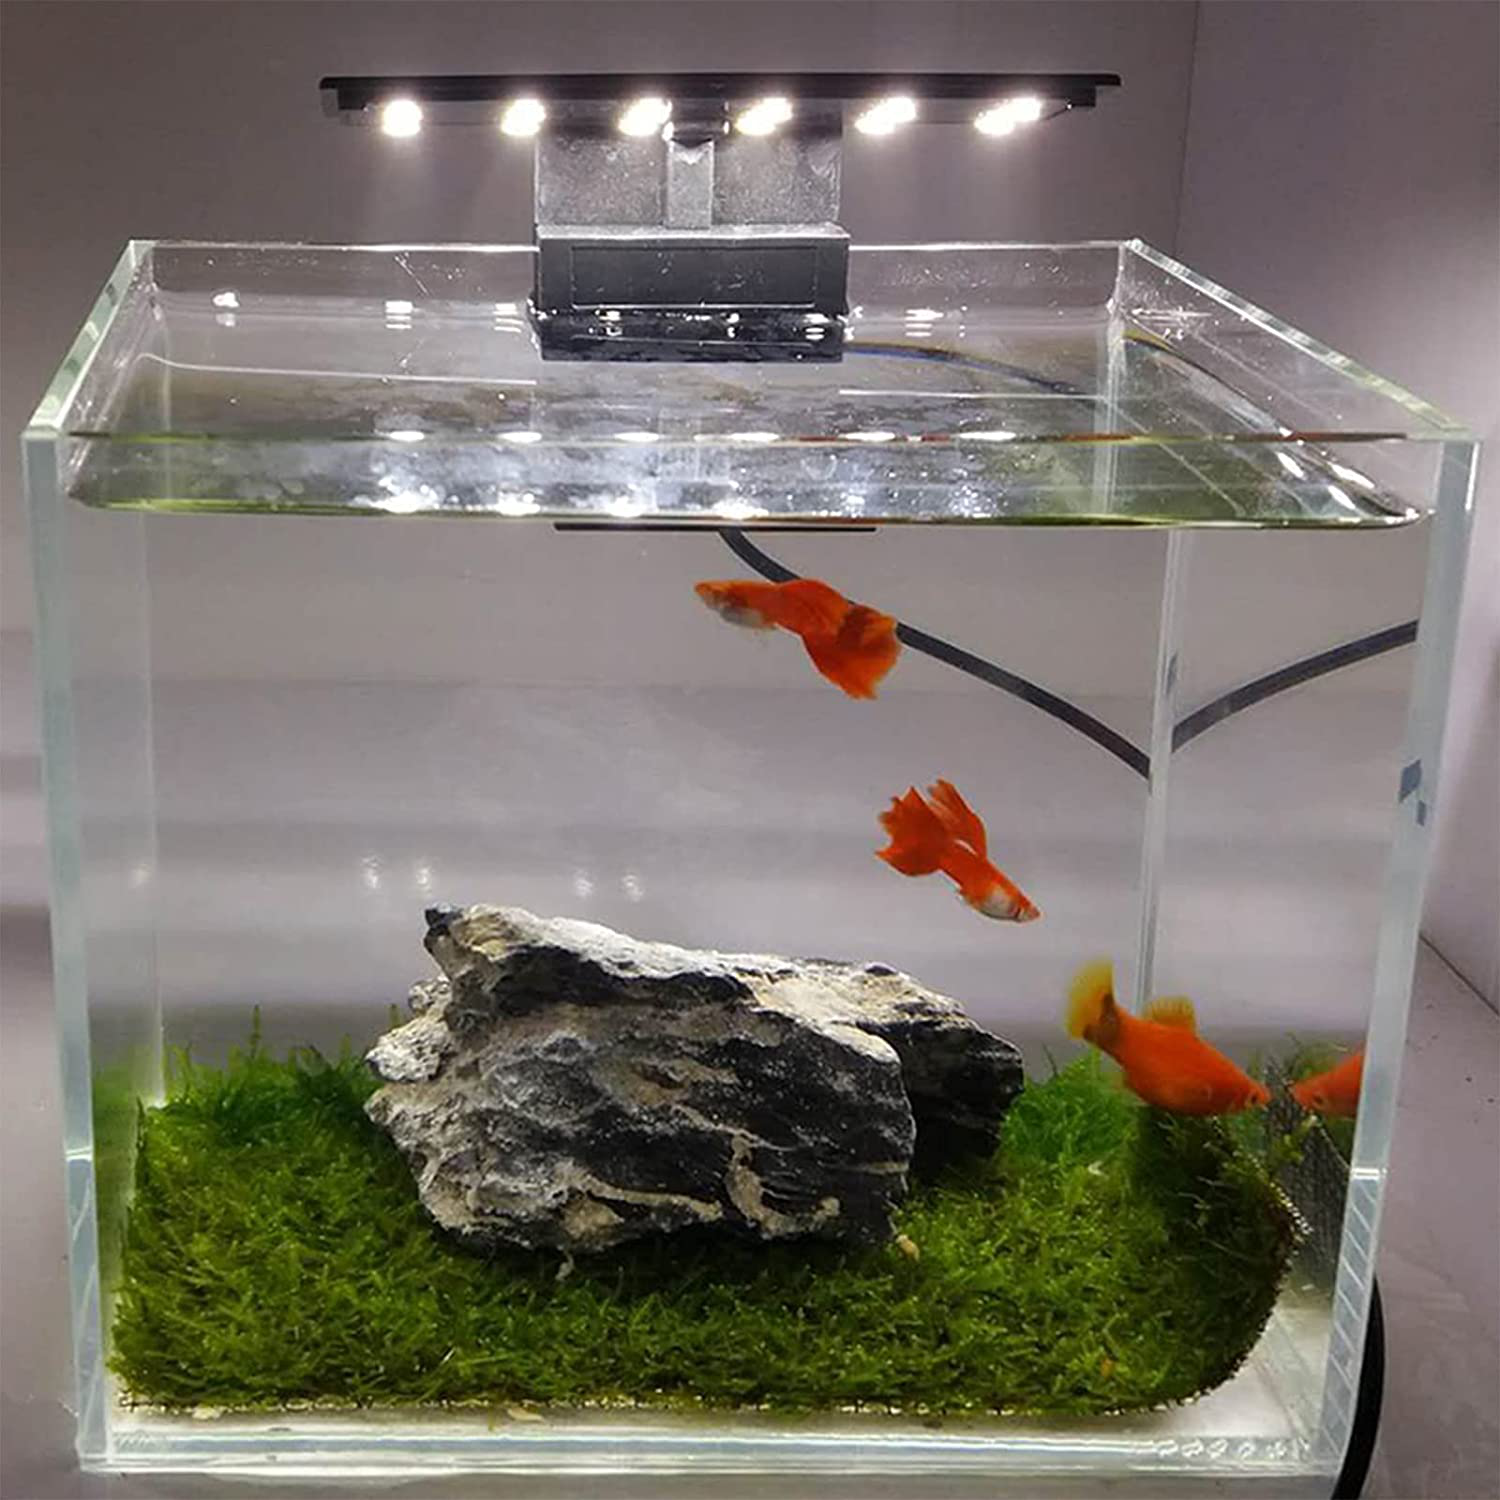 Decdeal 5W Ultra-Thin Aquarium LED Light,Fish Tank Light, Ultra Bright Clip-On Lighting Lamp 12 Leds for Aquarium Fish Tank